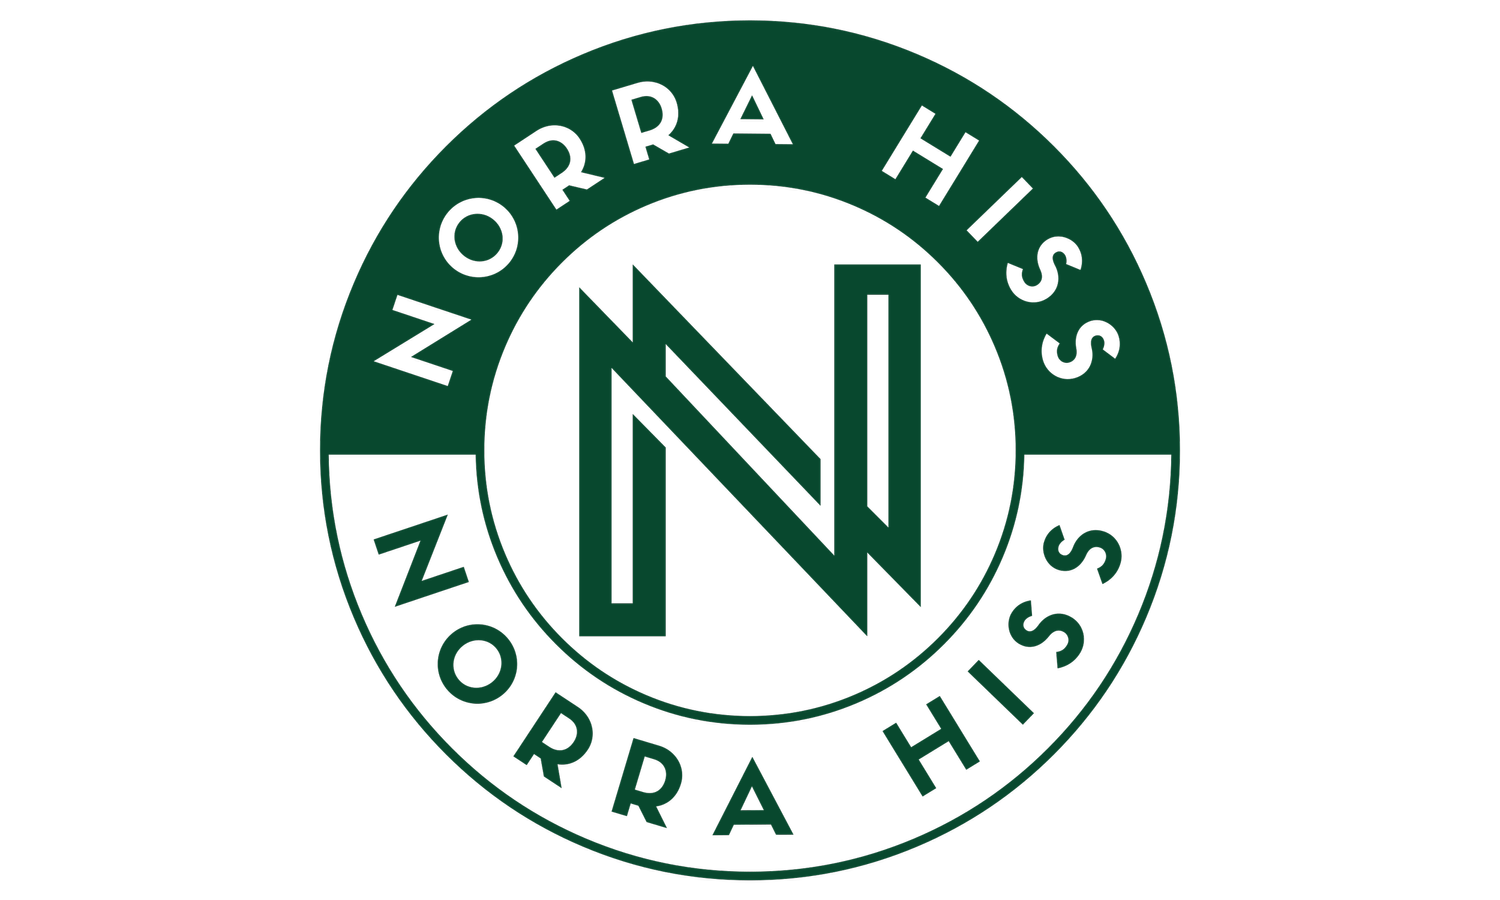 Norra Hiss